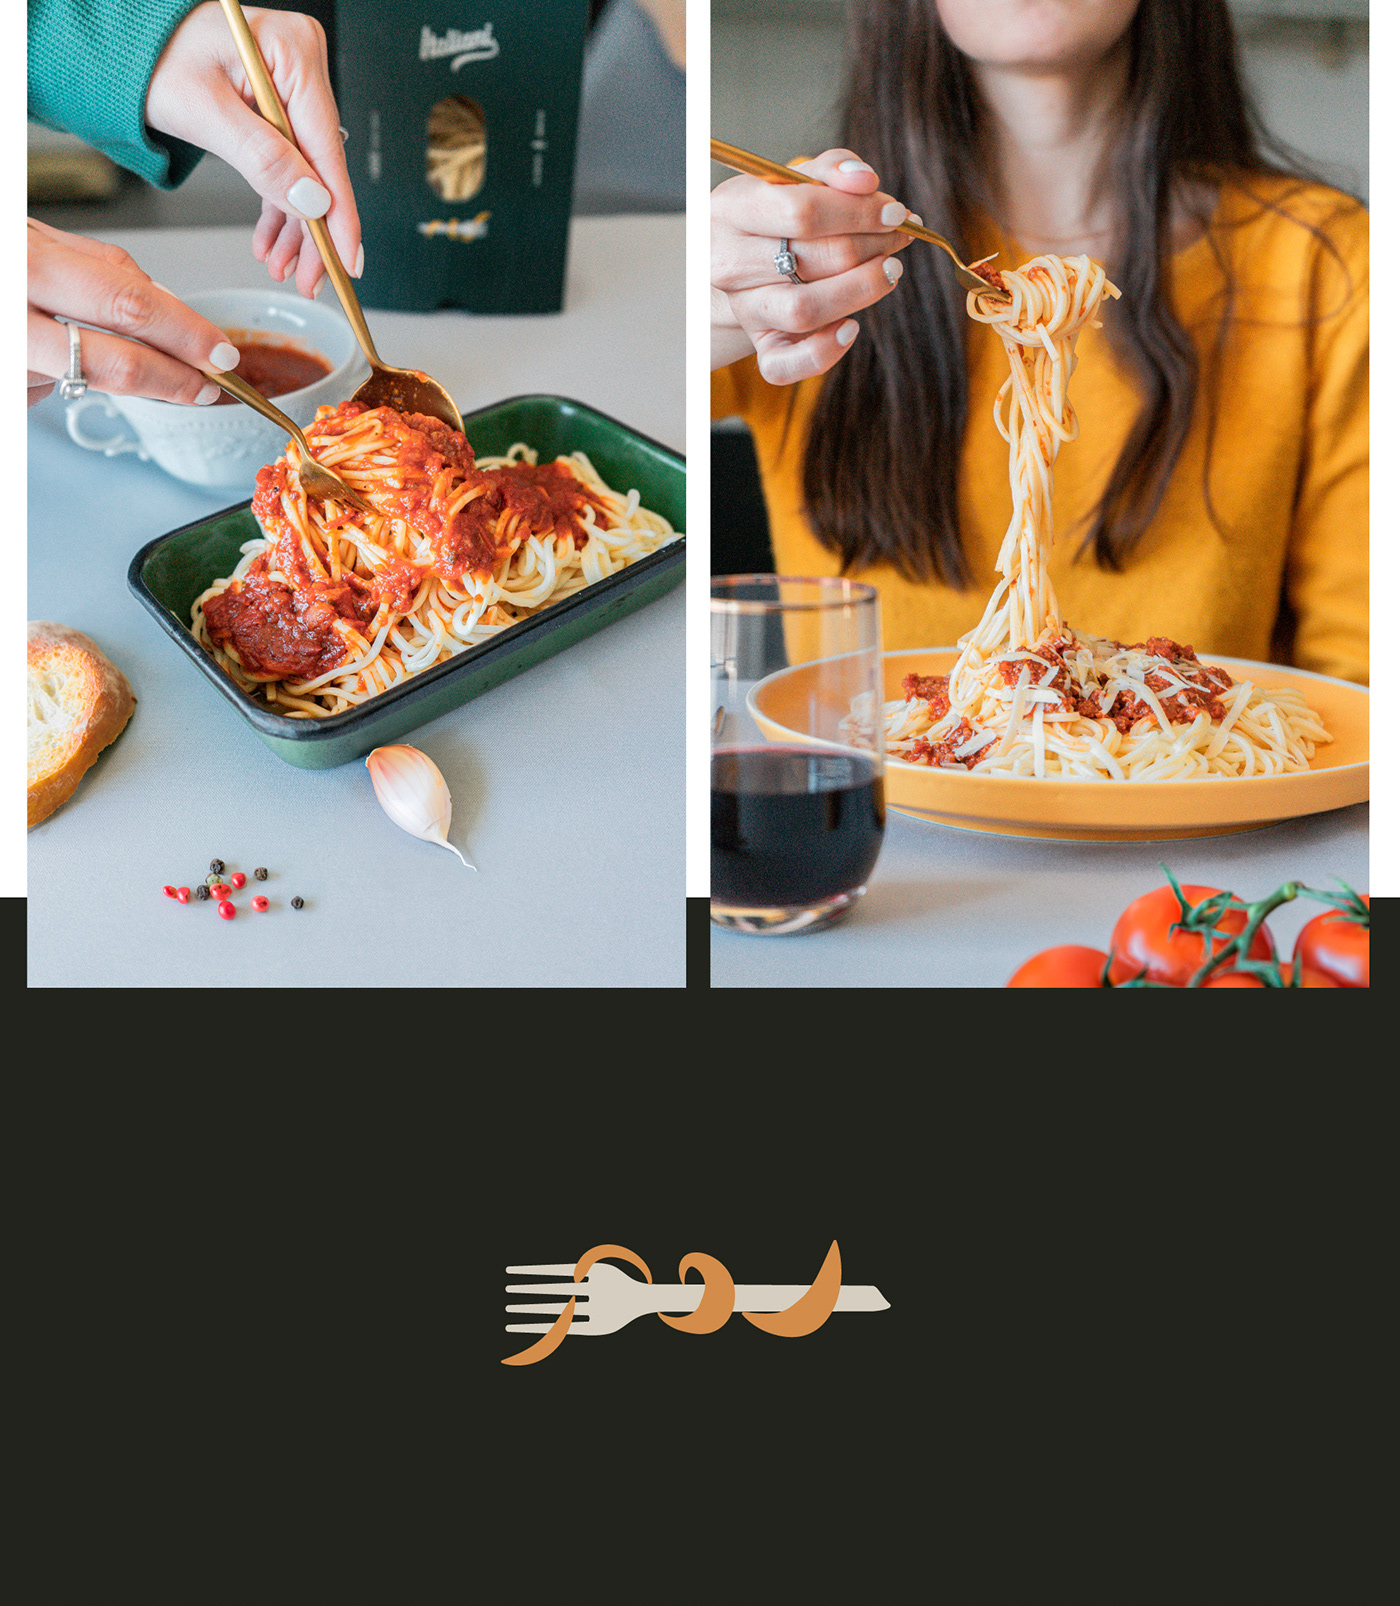 Food  visual identity brand marketing   architecture visualization interior design  Italian food brand identity